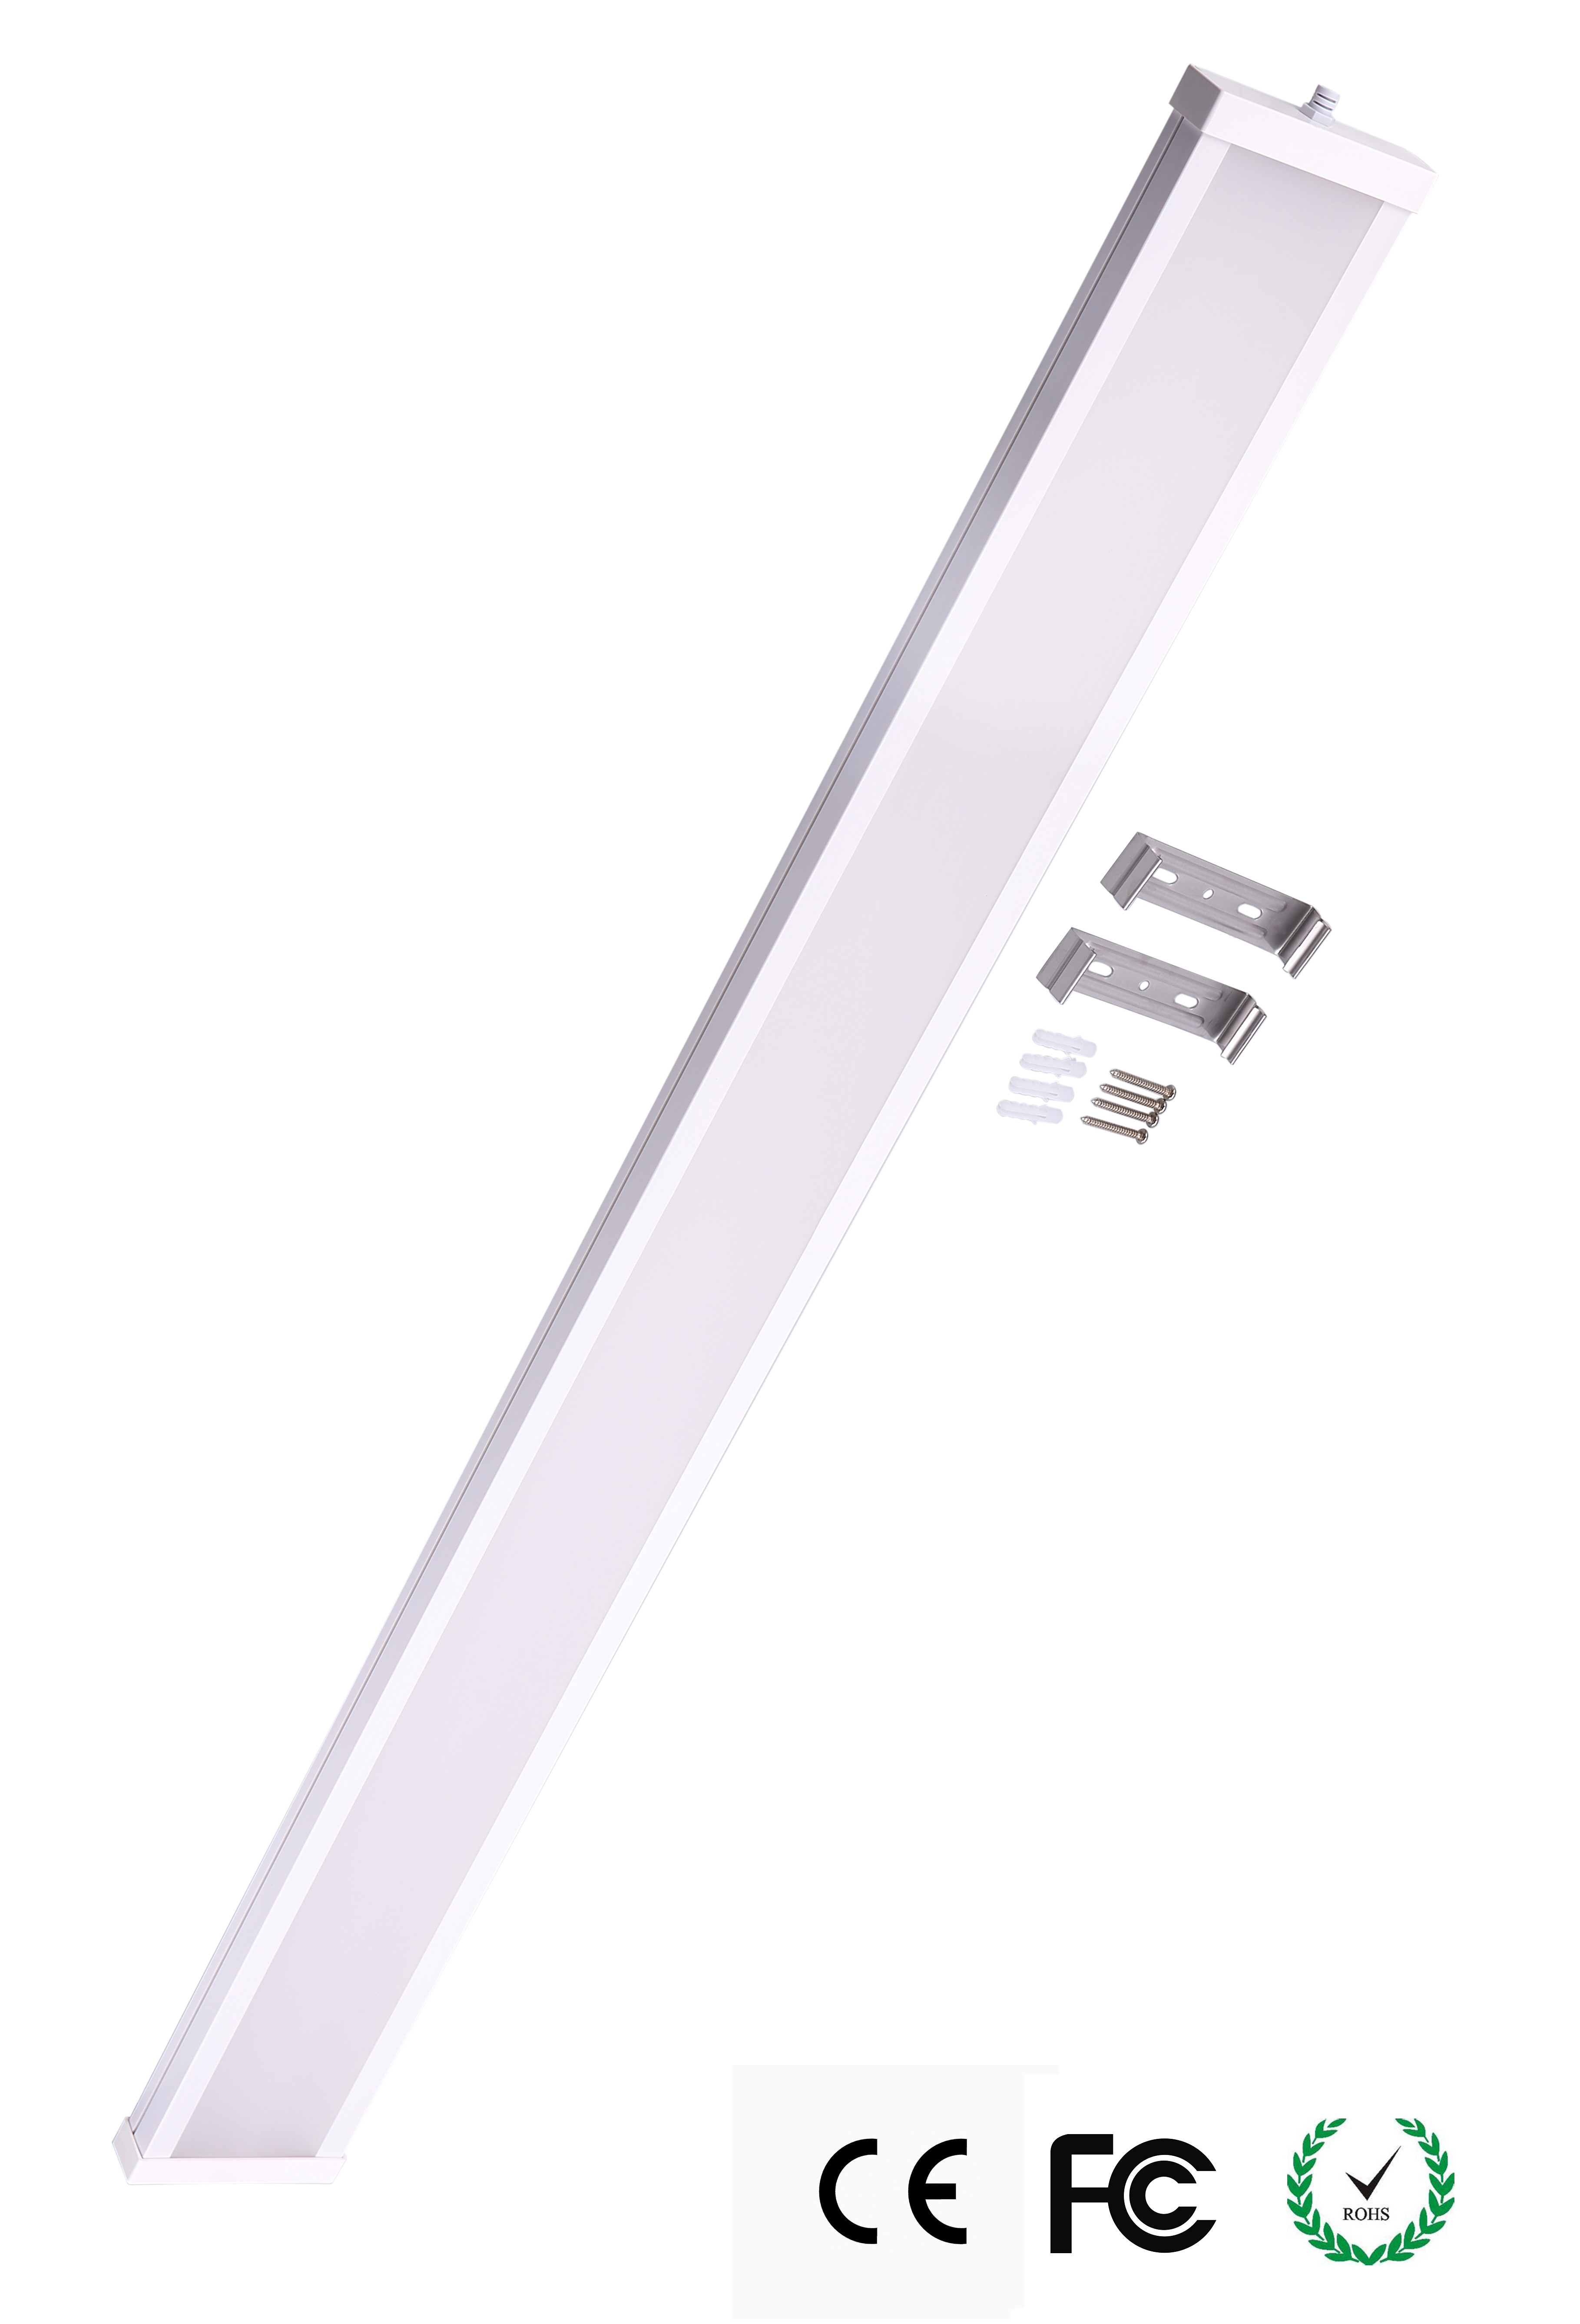 Buy cheap 5000 Lumens LED Tri-Proof Light Energy Saving 1500 x 120 x 30mm product